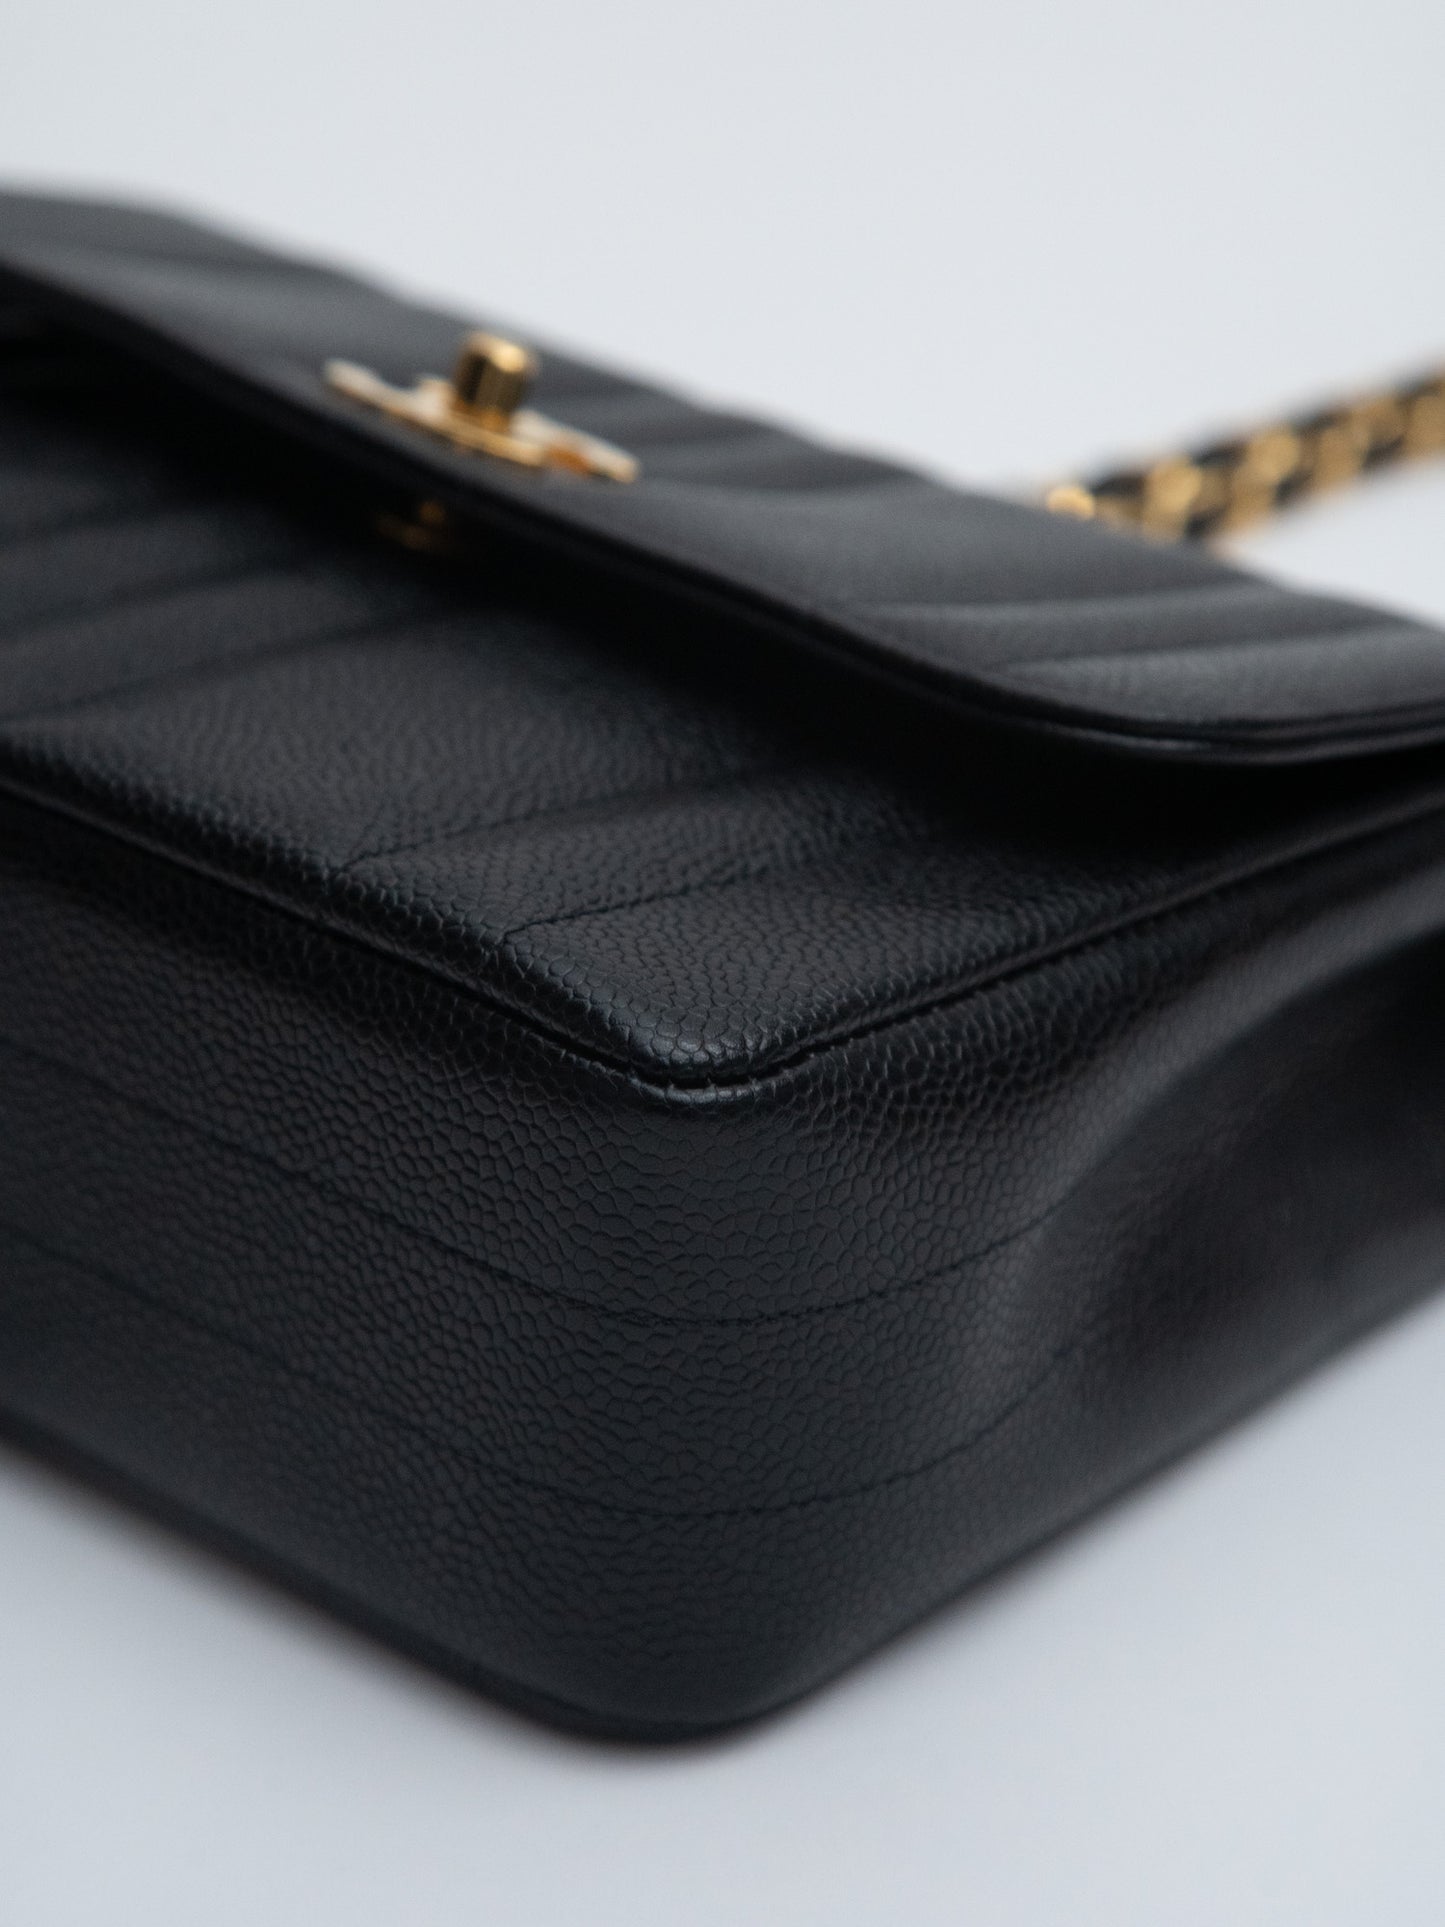 Chanel Mademoiselle Chain Shoulder Bag Caviar Skin Black Gold Hardware